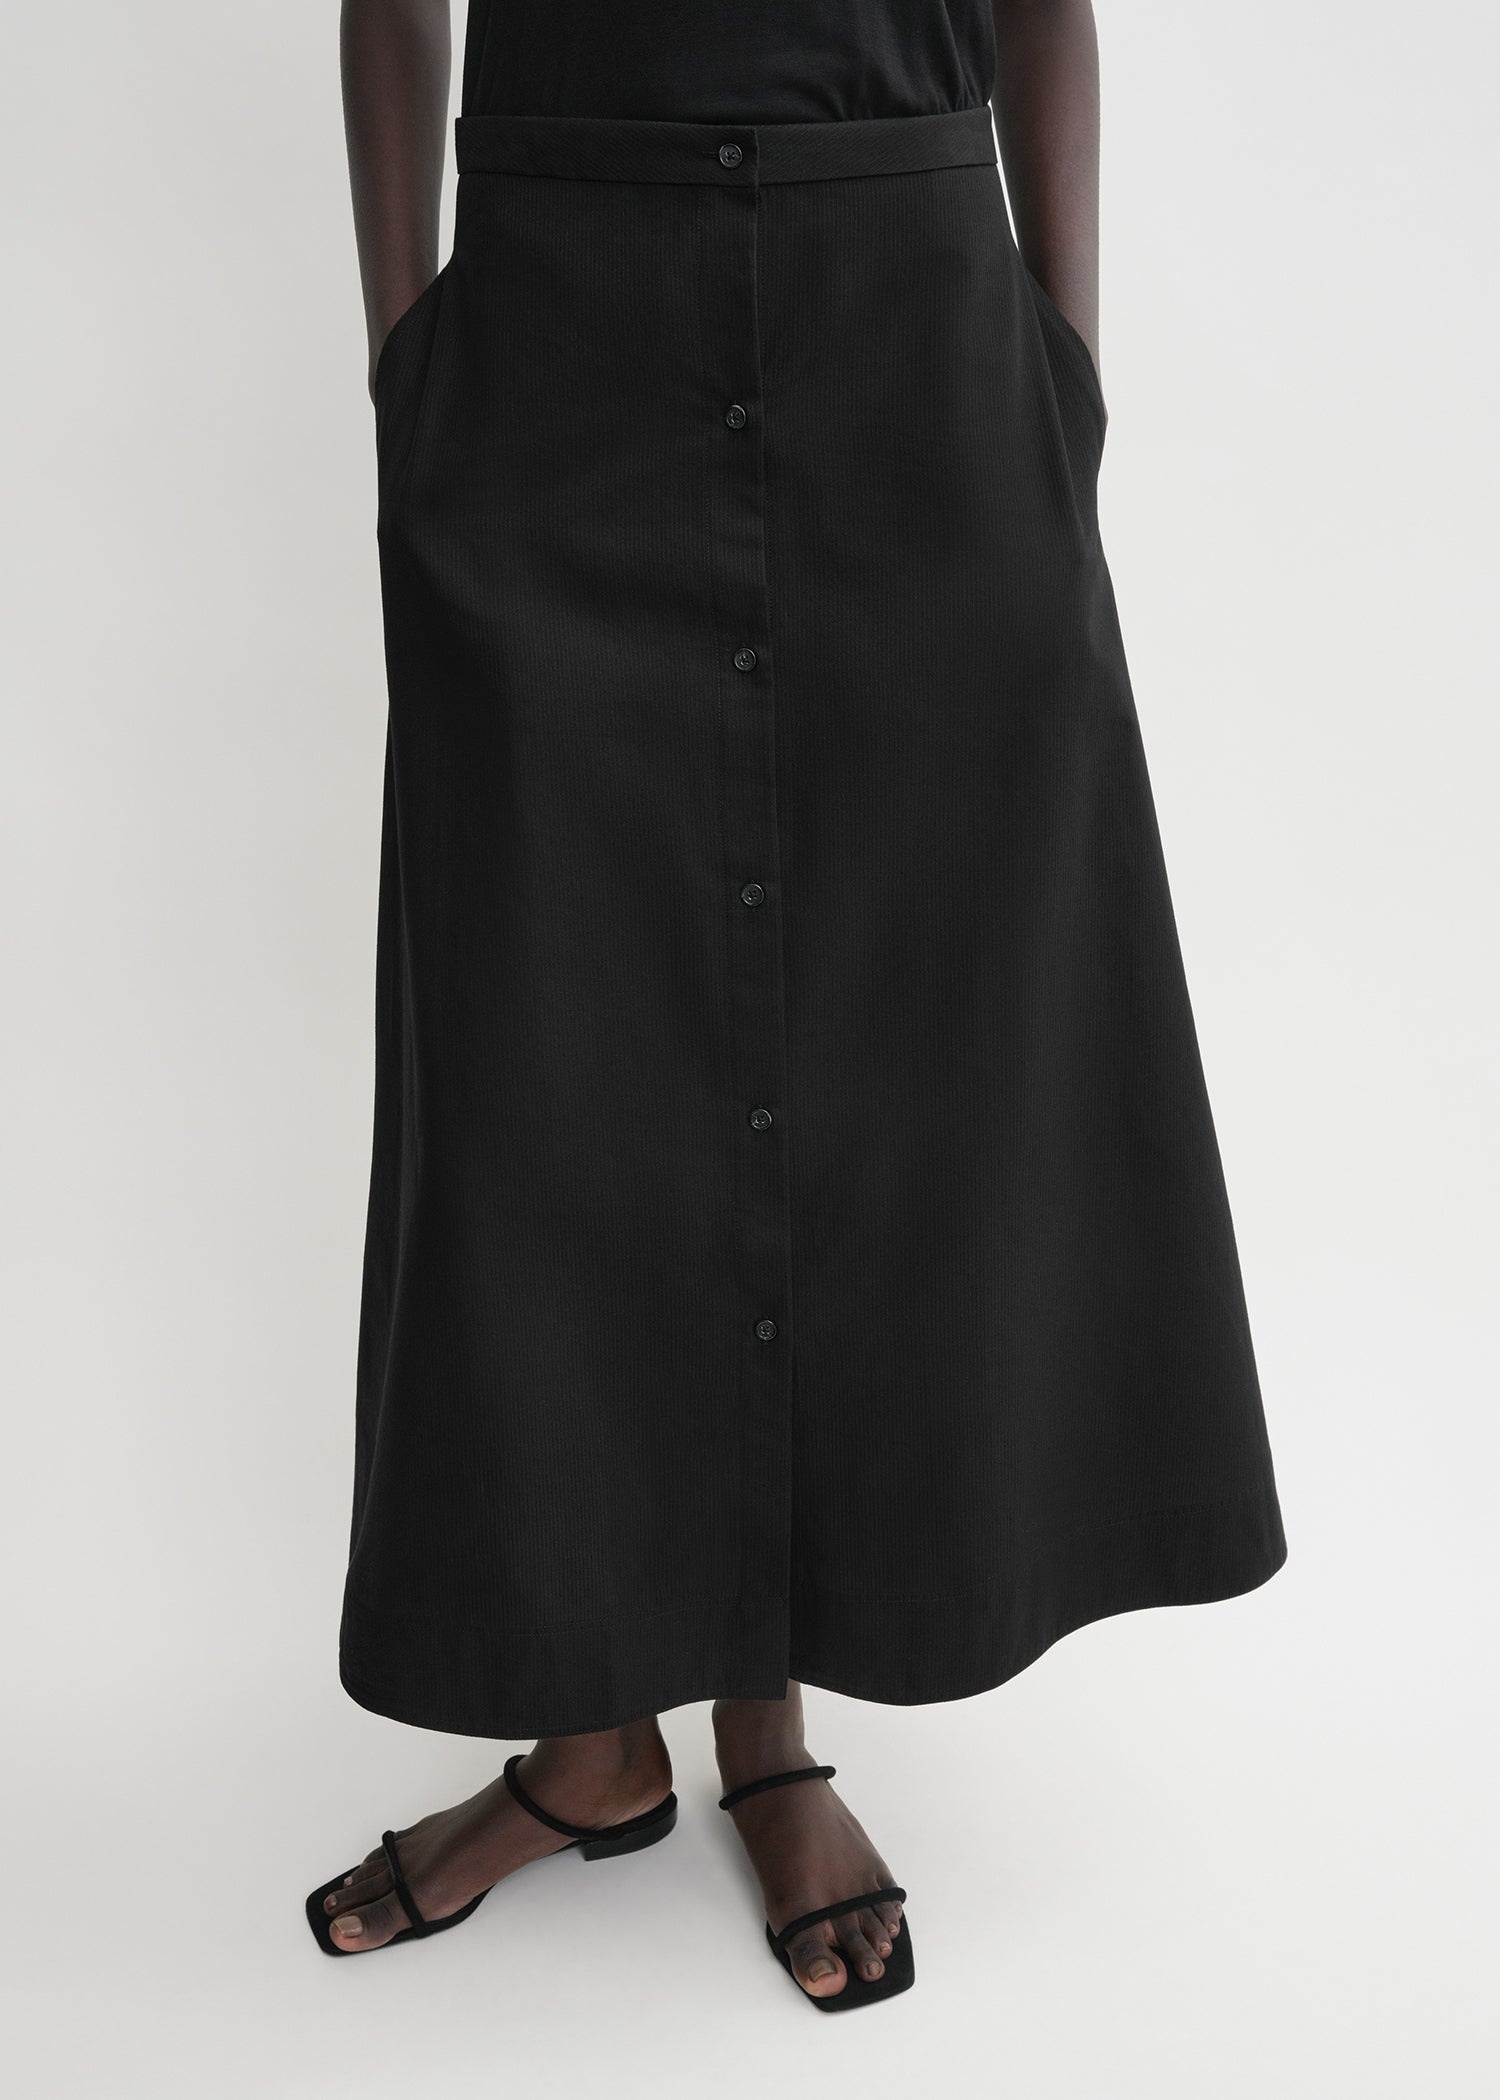 Jacquard stripe skirt black - 5